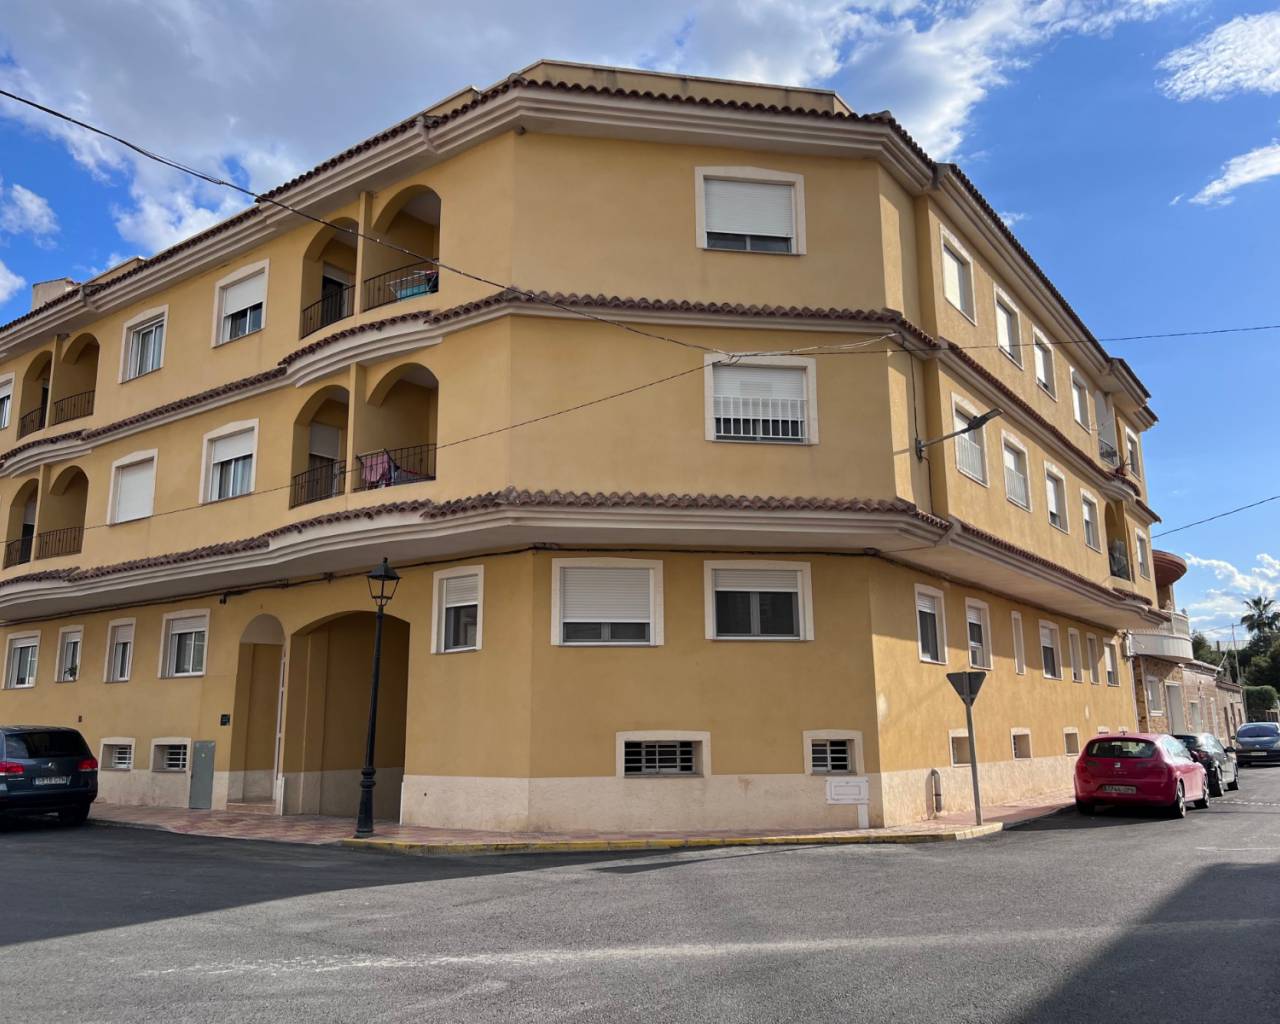 Apartment - Venta - Jacarilla - C11ZH-44573